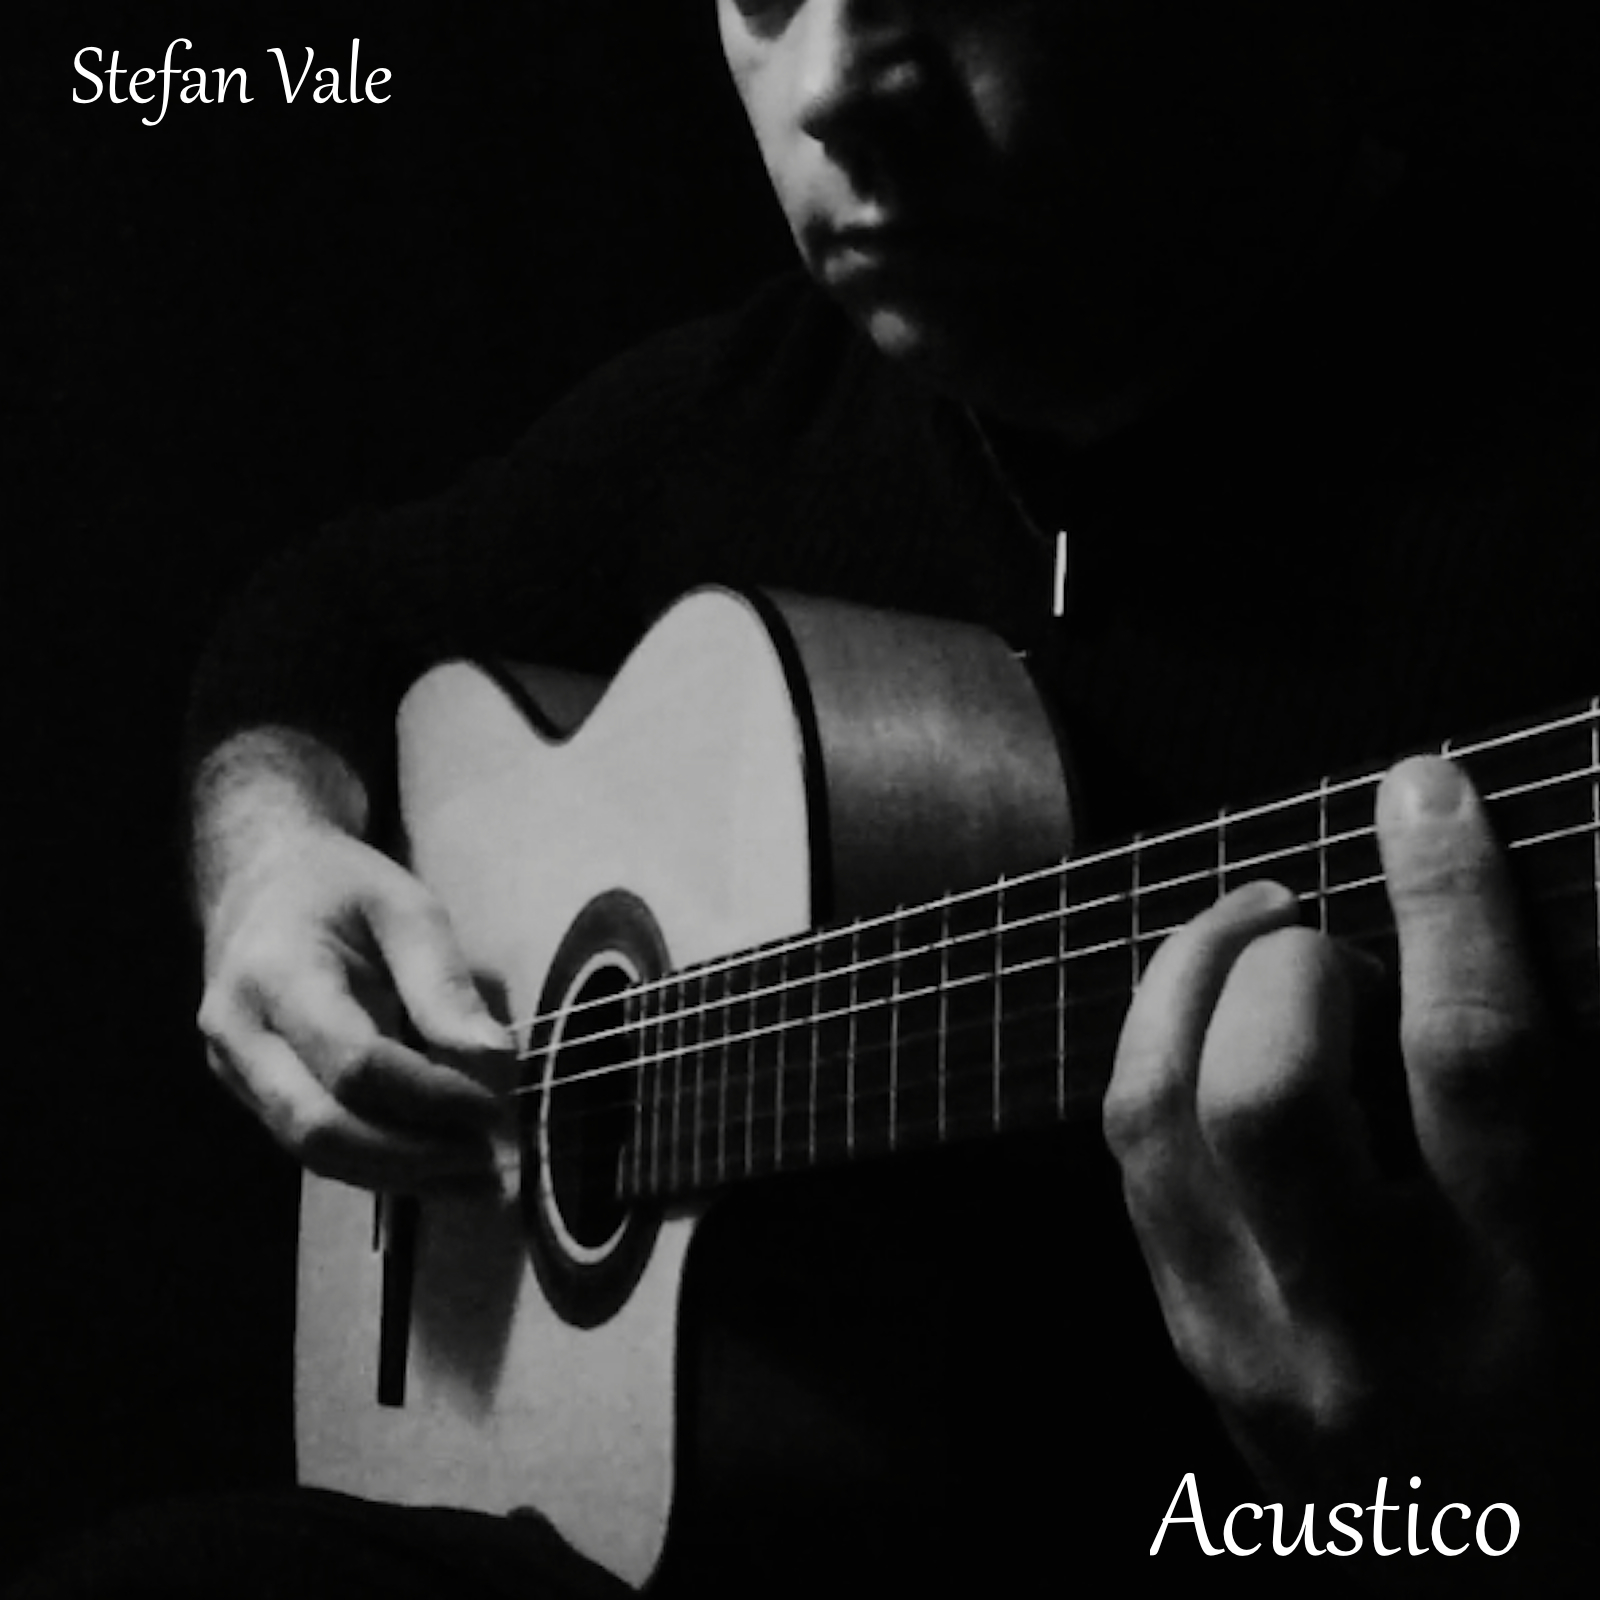 Stefan Vale - Acustico